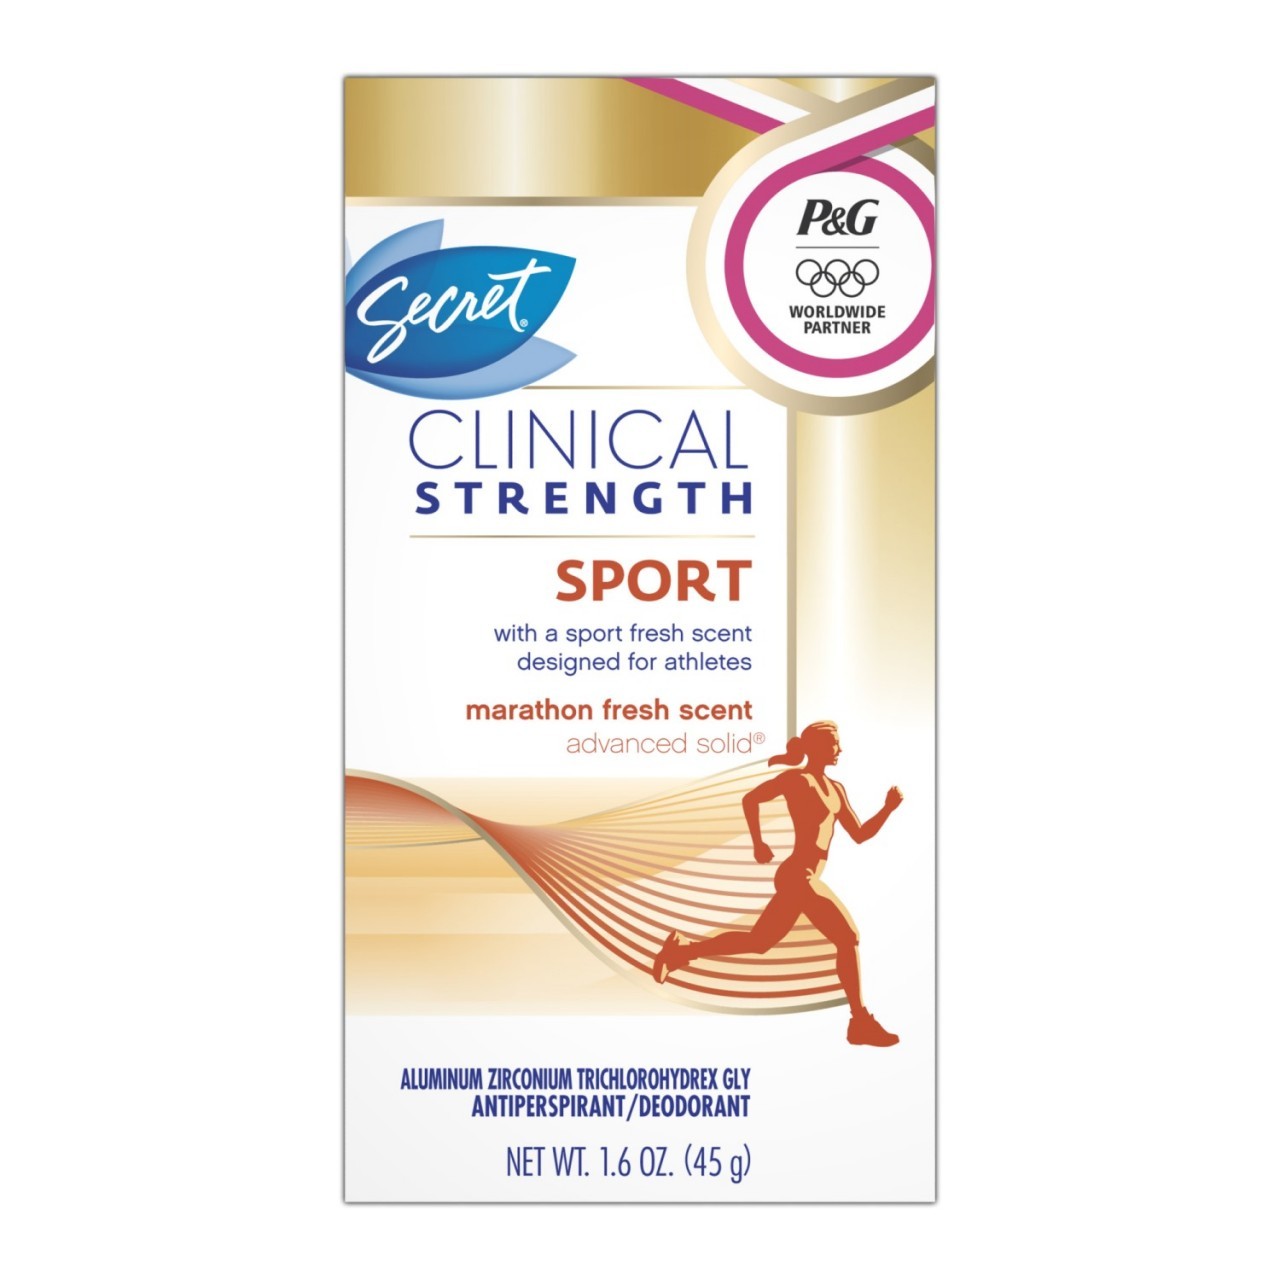 Secret Clinical Strength Sport Advanced Solid Antiperspirant and Deodorant Marathon Fresh Scent 1.6 Ounce. $1,907.20 JMD